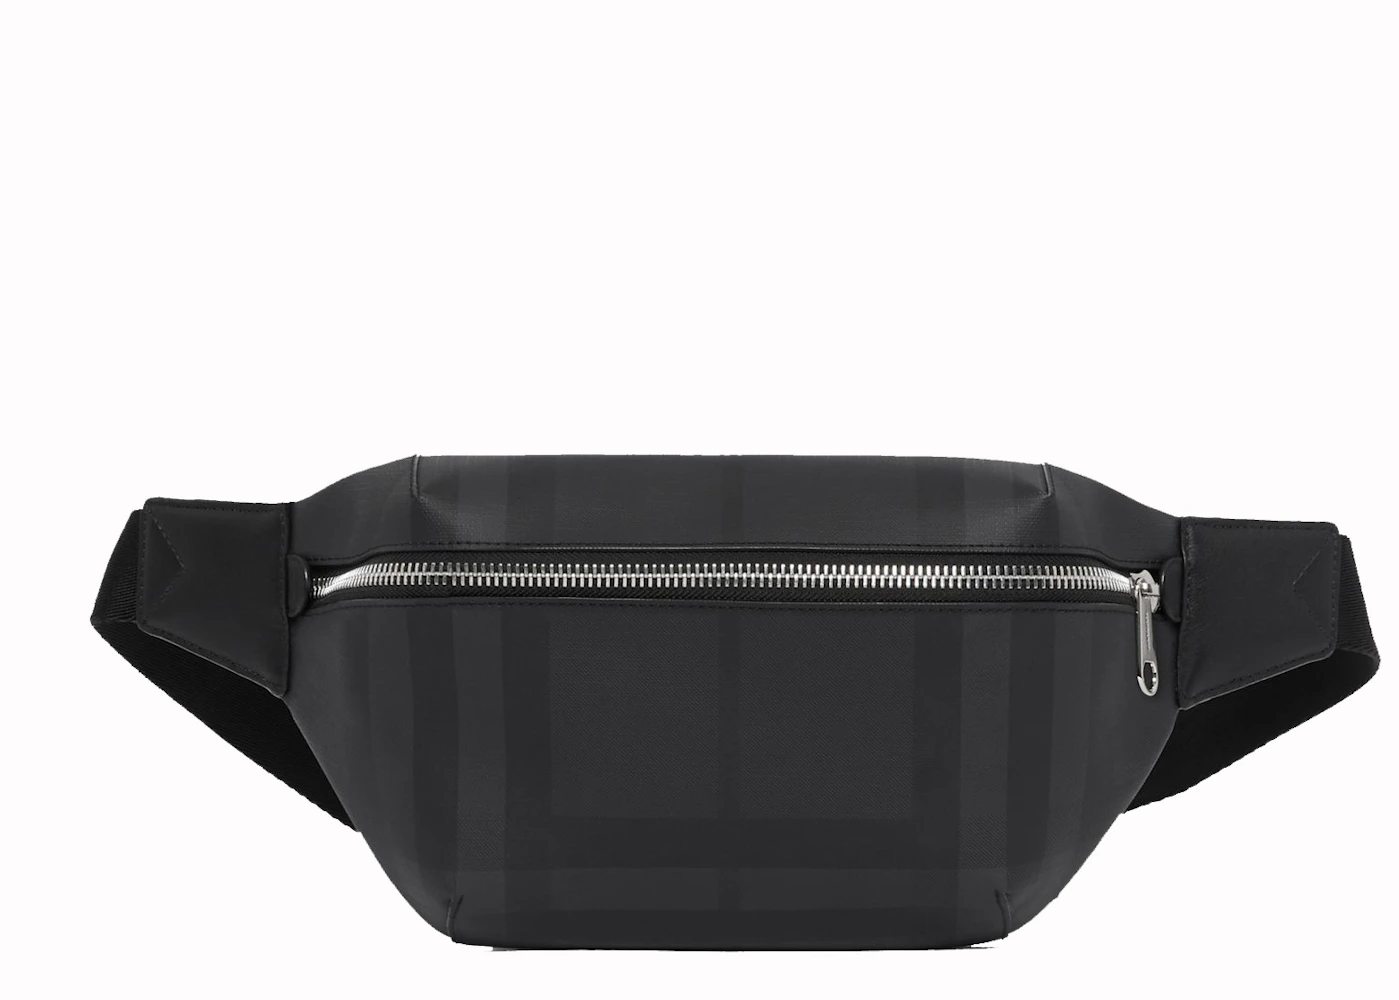 Burberry Leather Cube Bum Bag - Black Waist Bags, Handbags - BUR370726